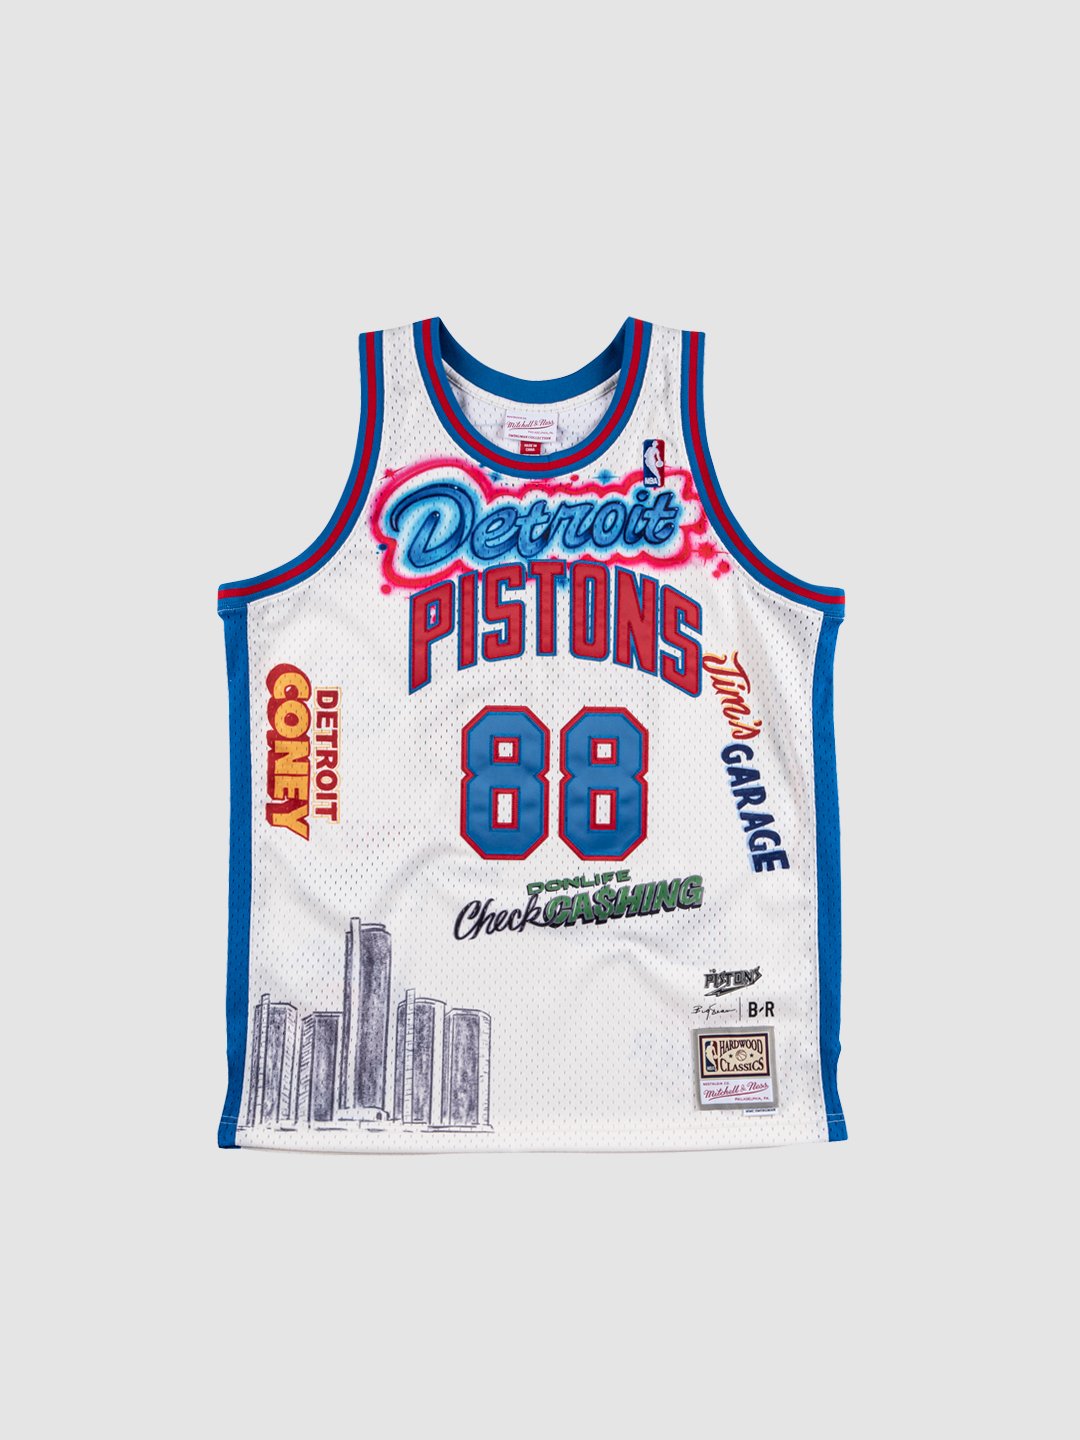 Big Sean helps creates new Pistons city edition jerseys